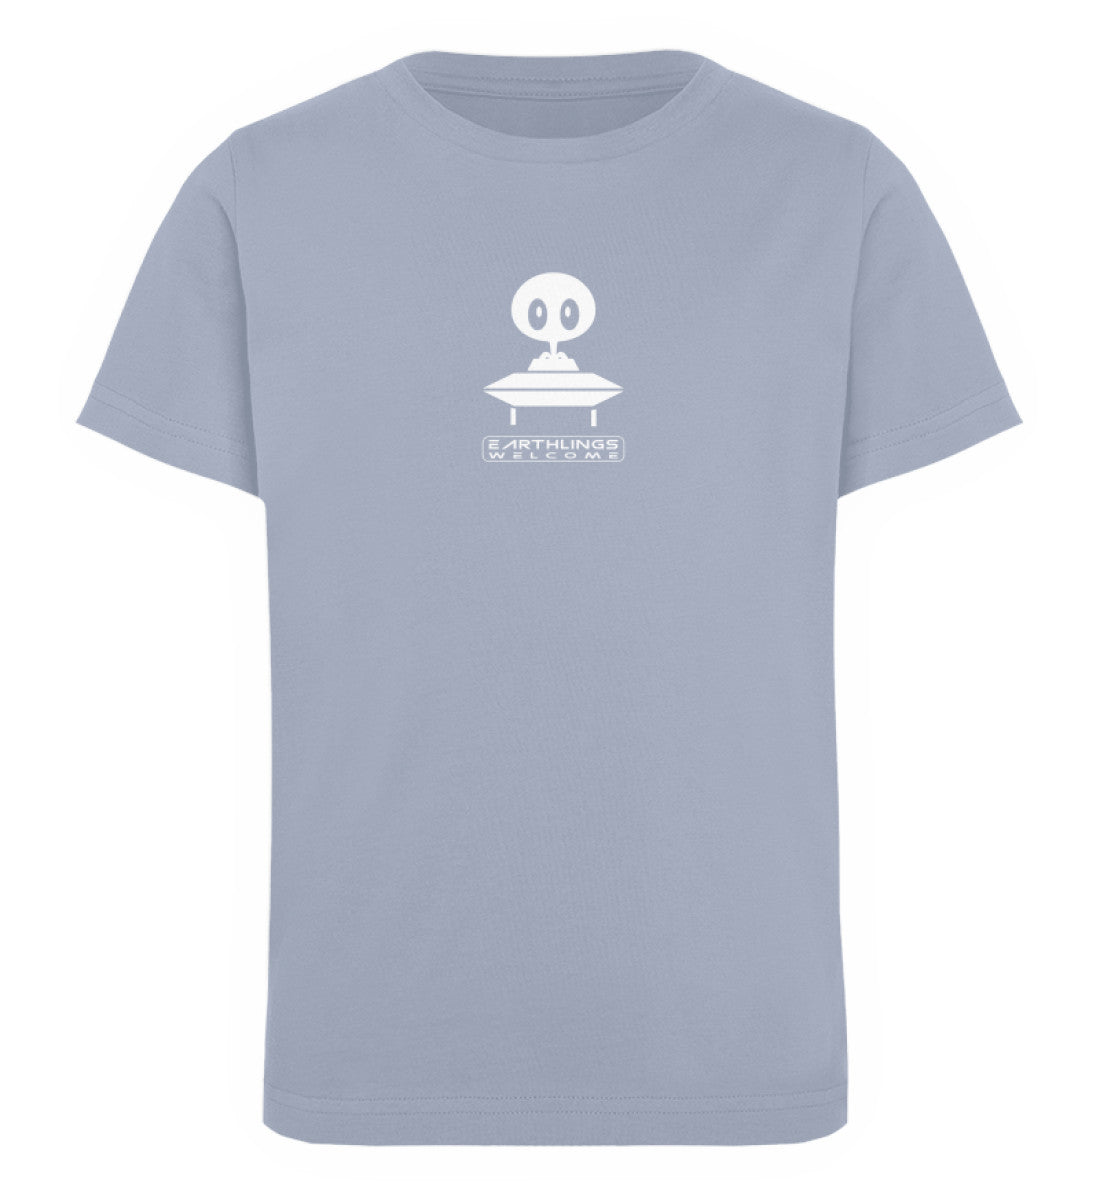 Serene Blue farbiges Kinder T-Shirt für Mädchen und Jungen bedruckt mit dem Design der Roger Rockawoo Kollektion Community Ufo alien earthlings welcome